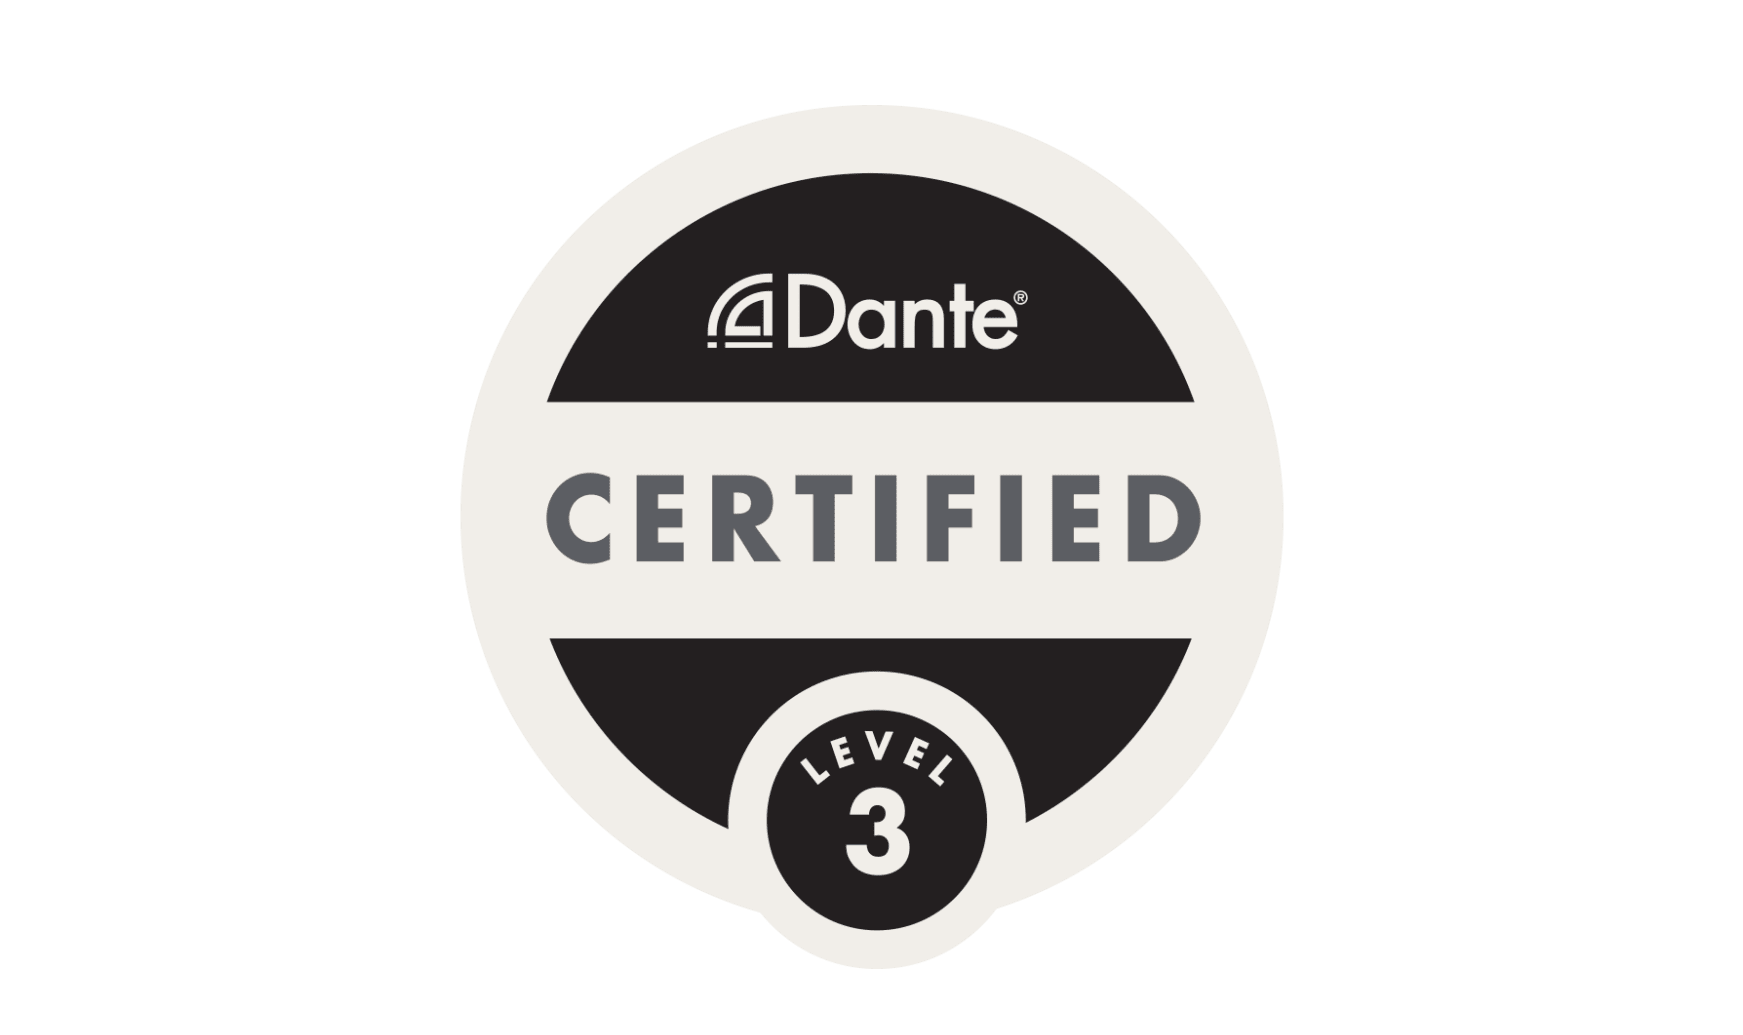 Dante Level 3 certification